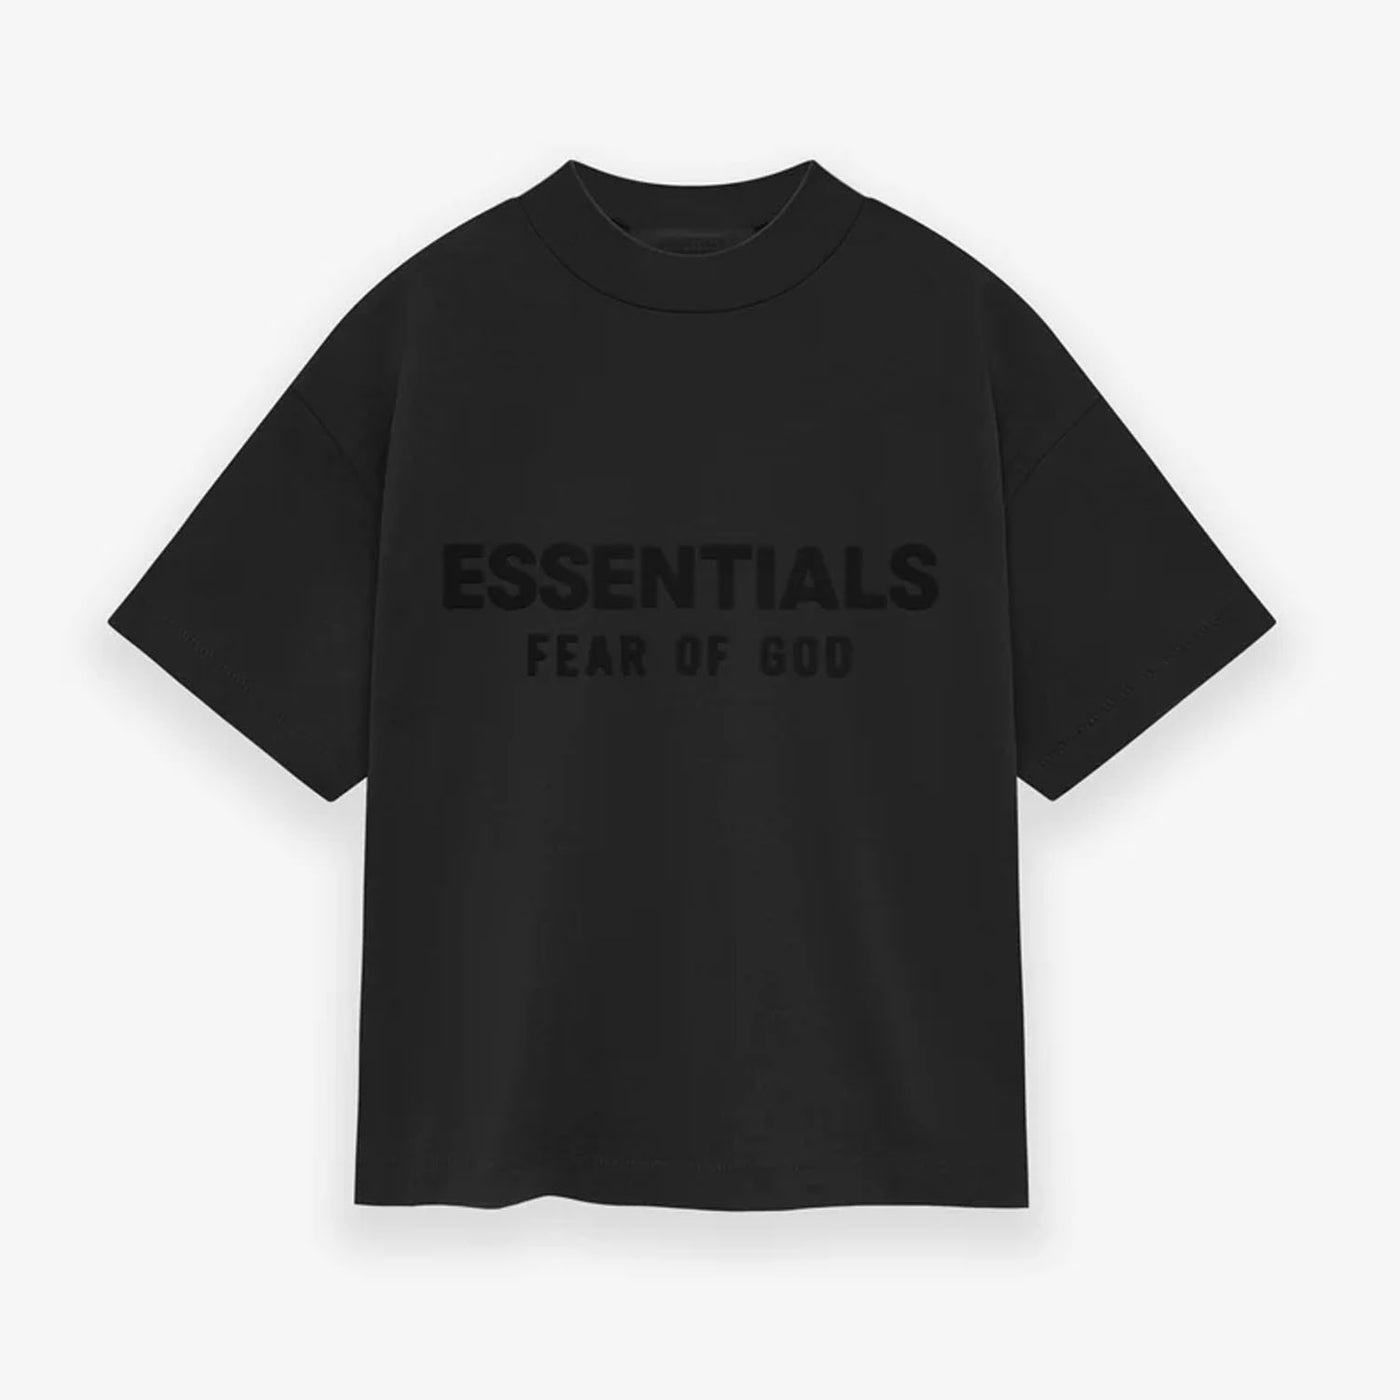 Essentials Fear Of God T-Shirt - Jet Black